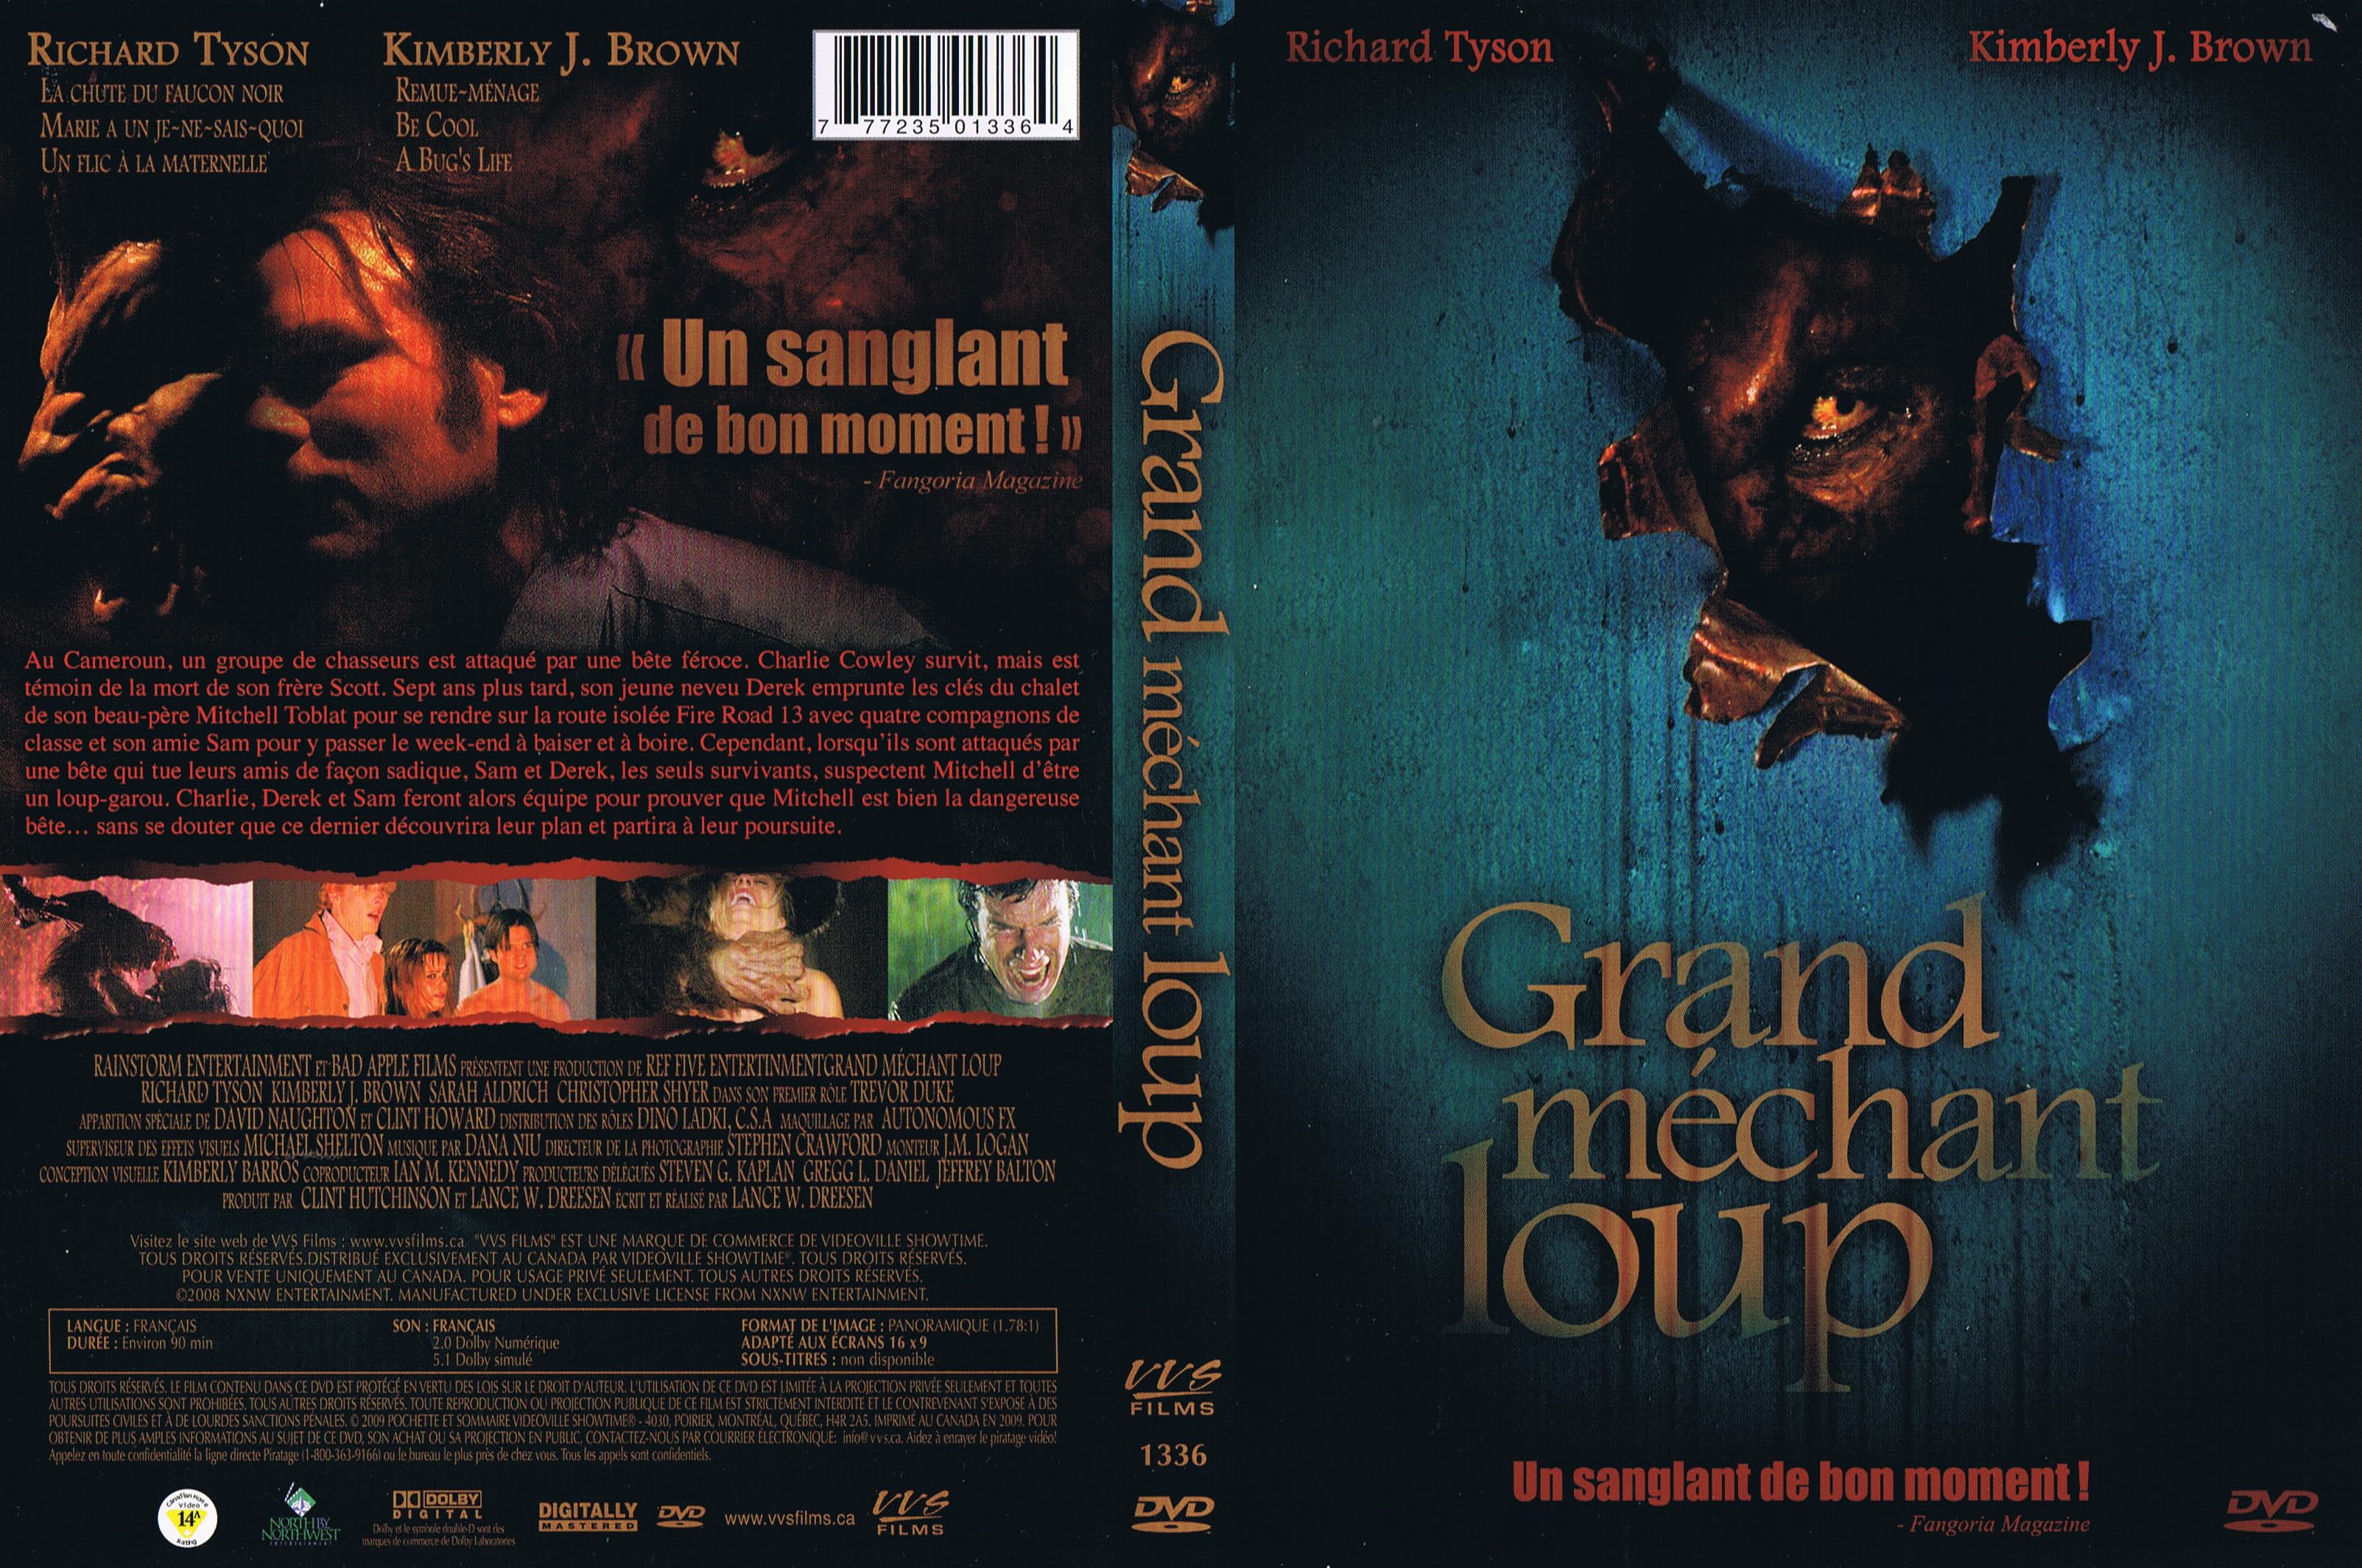 Jaquette DVD Grand mechant loup (Canadienne)